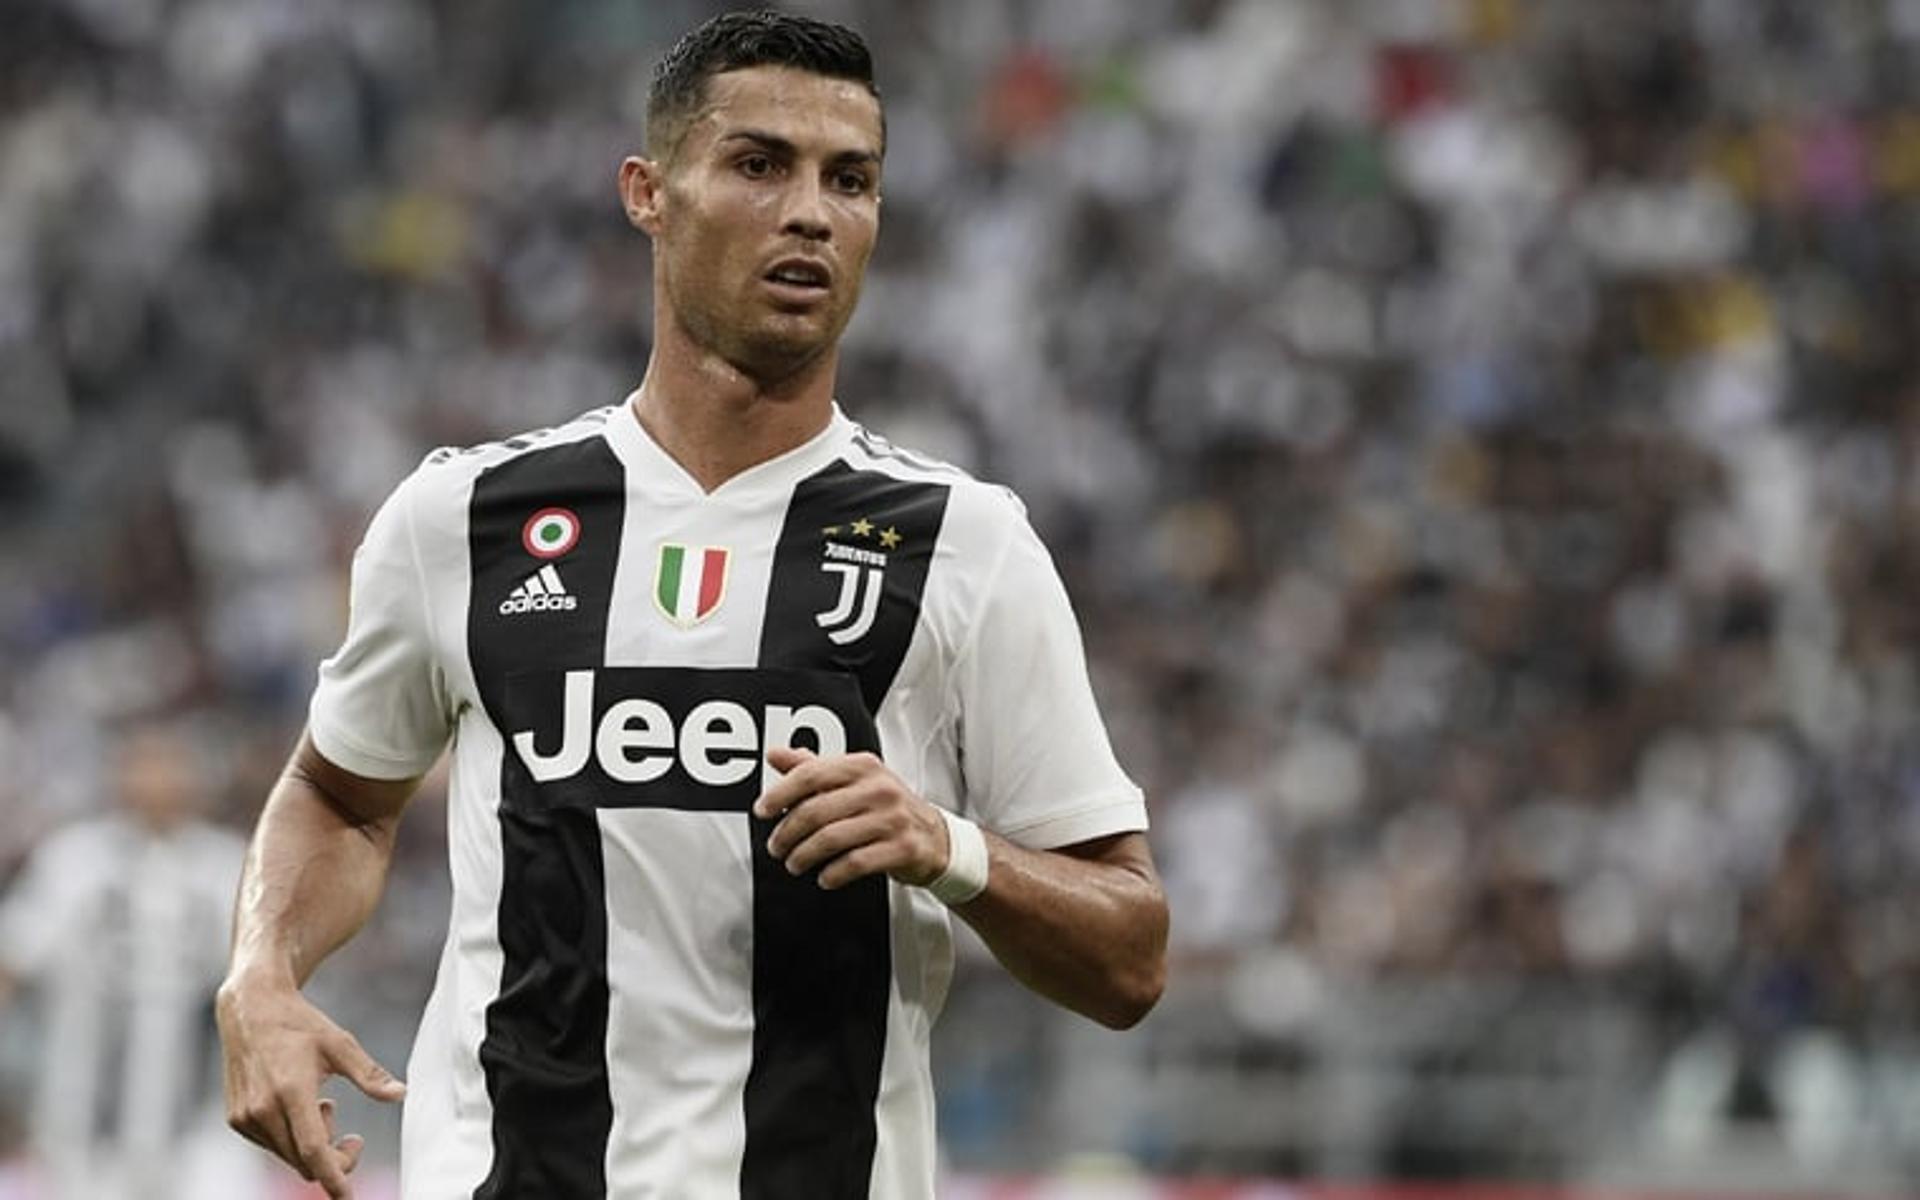 01 - Cristiano Ronaldo (Juventus) - R$ 150 milhões